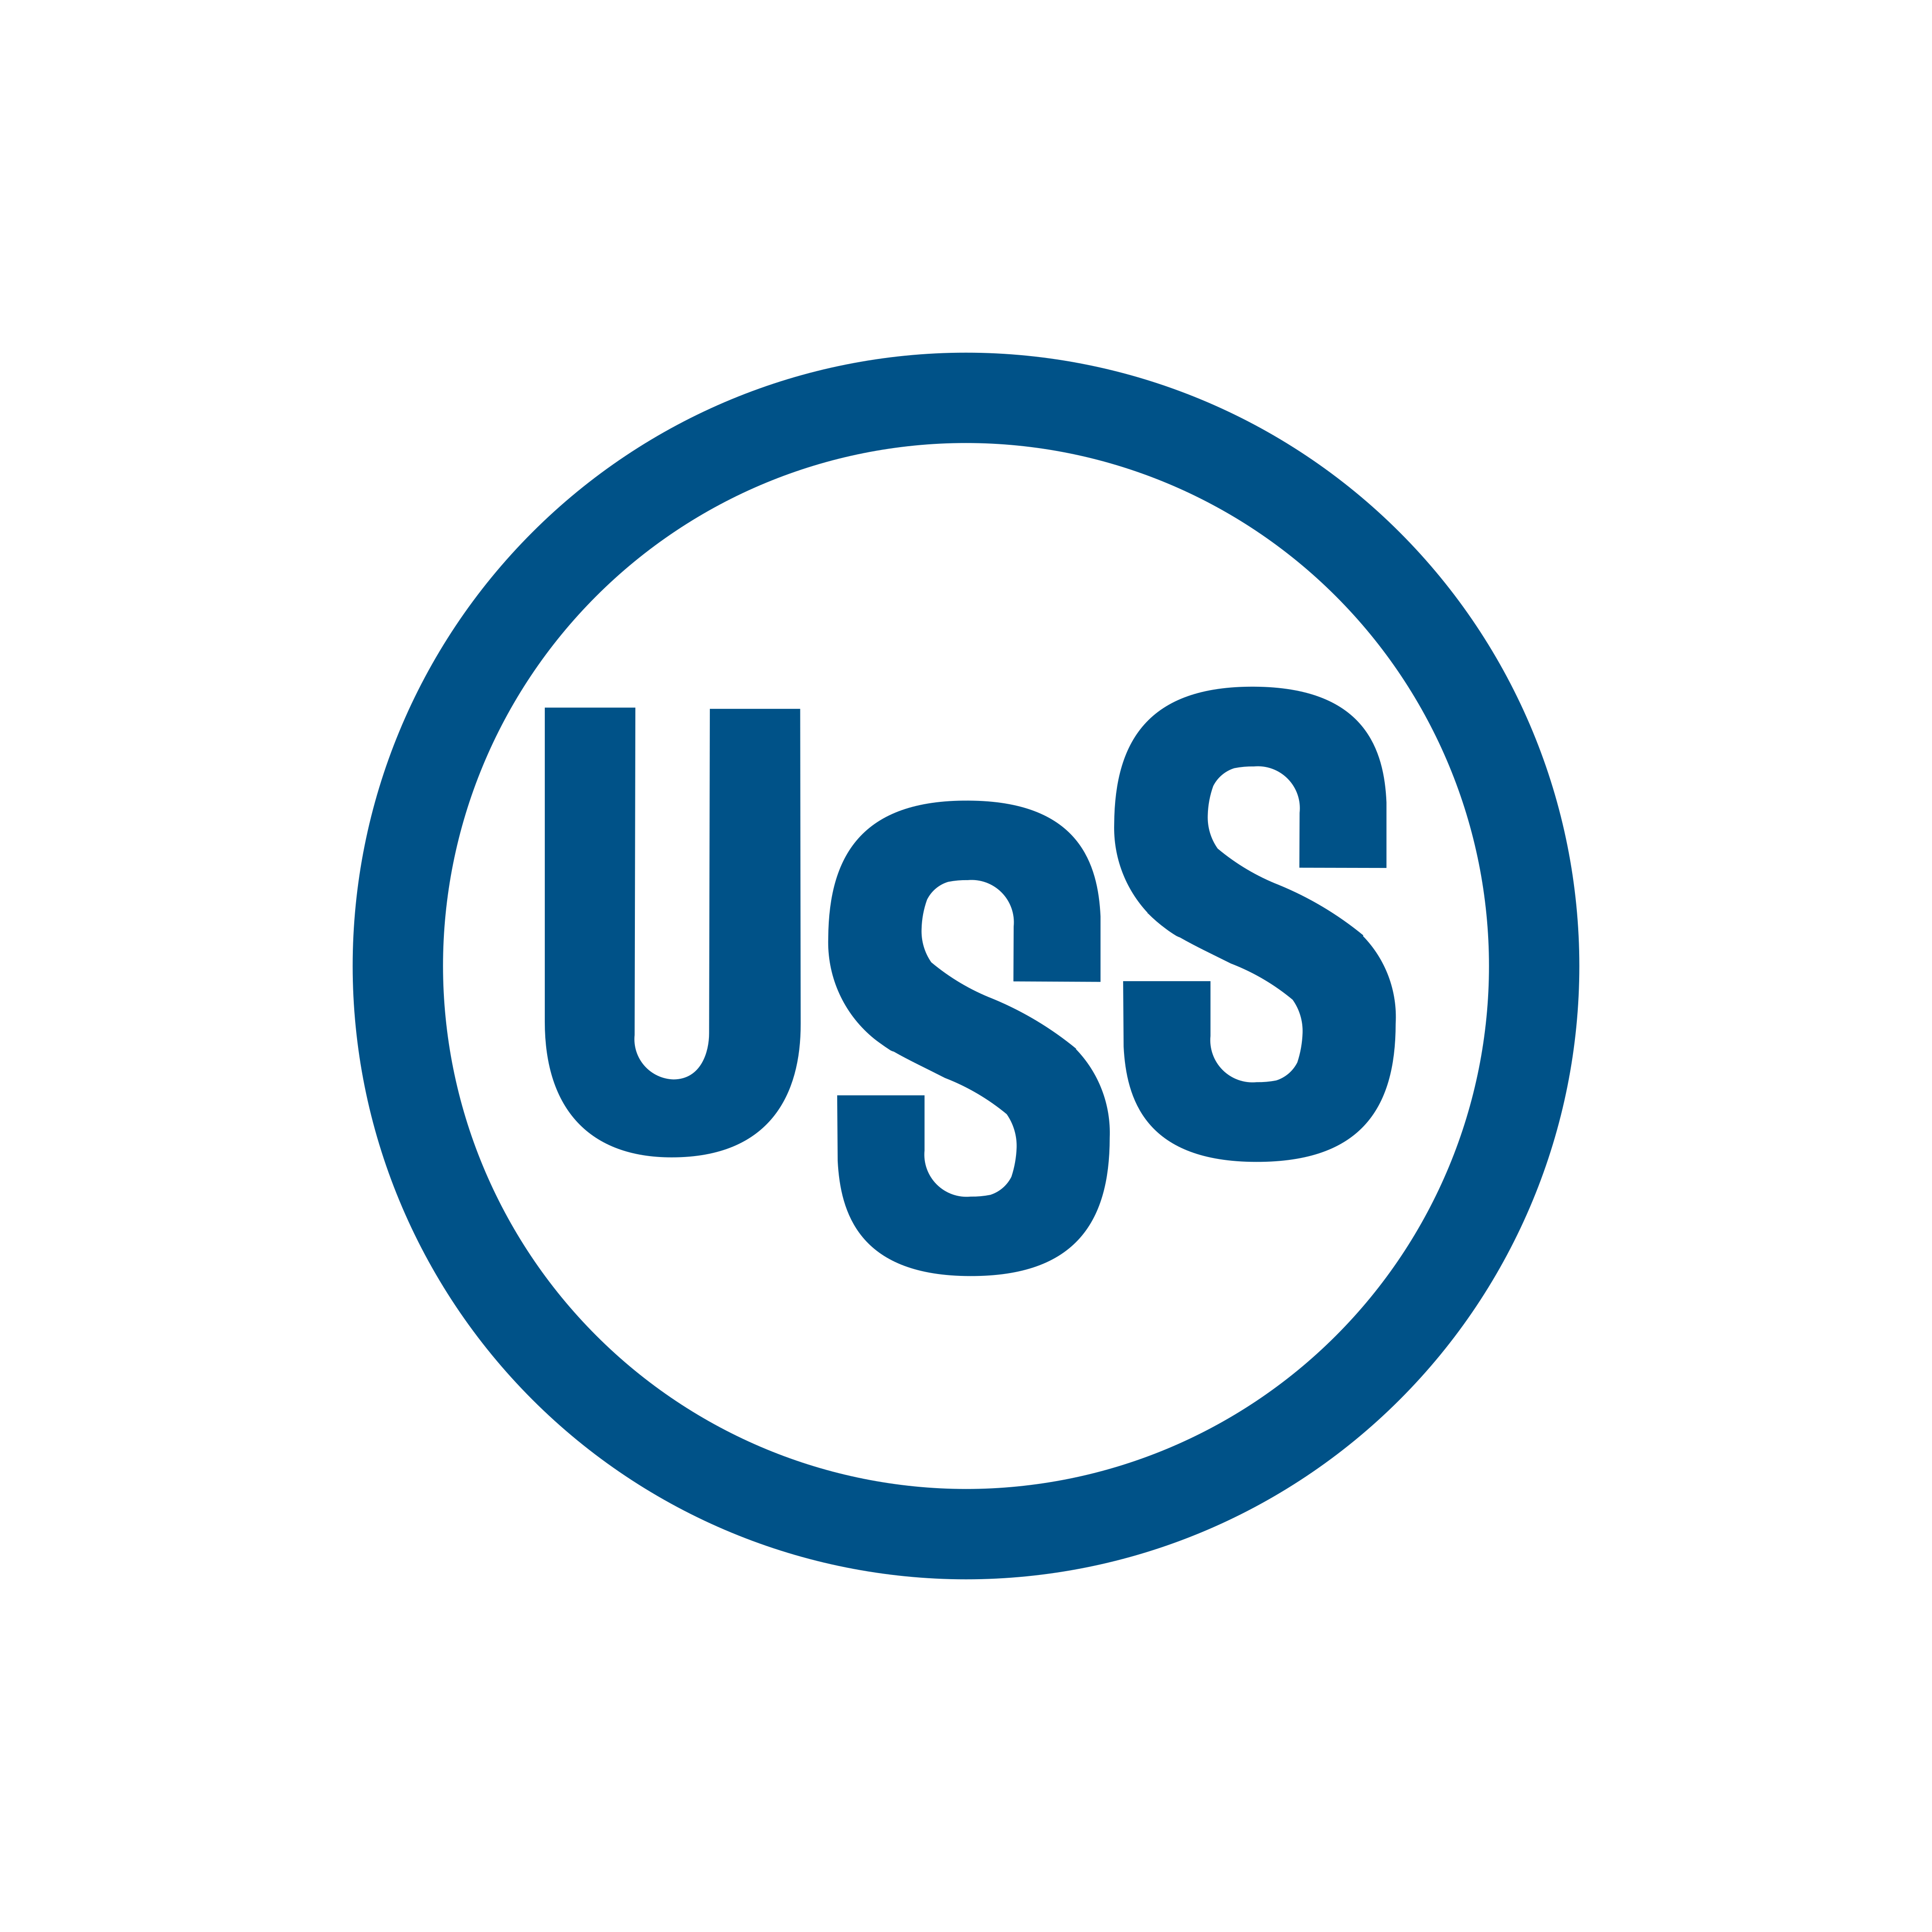 uss united states steel logo 0 - USS Logo - United States Steel Logo